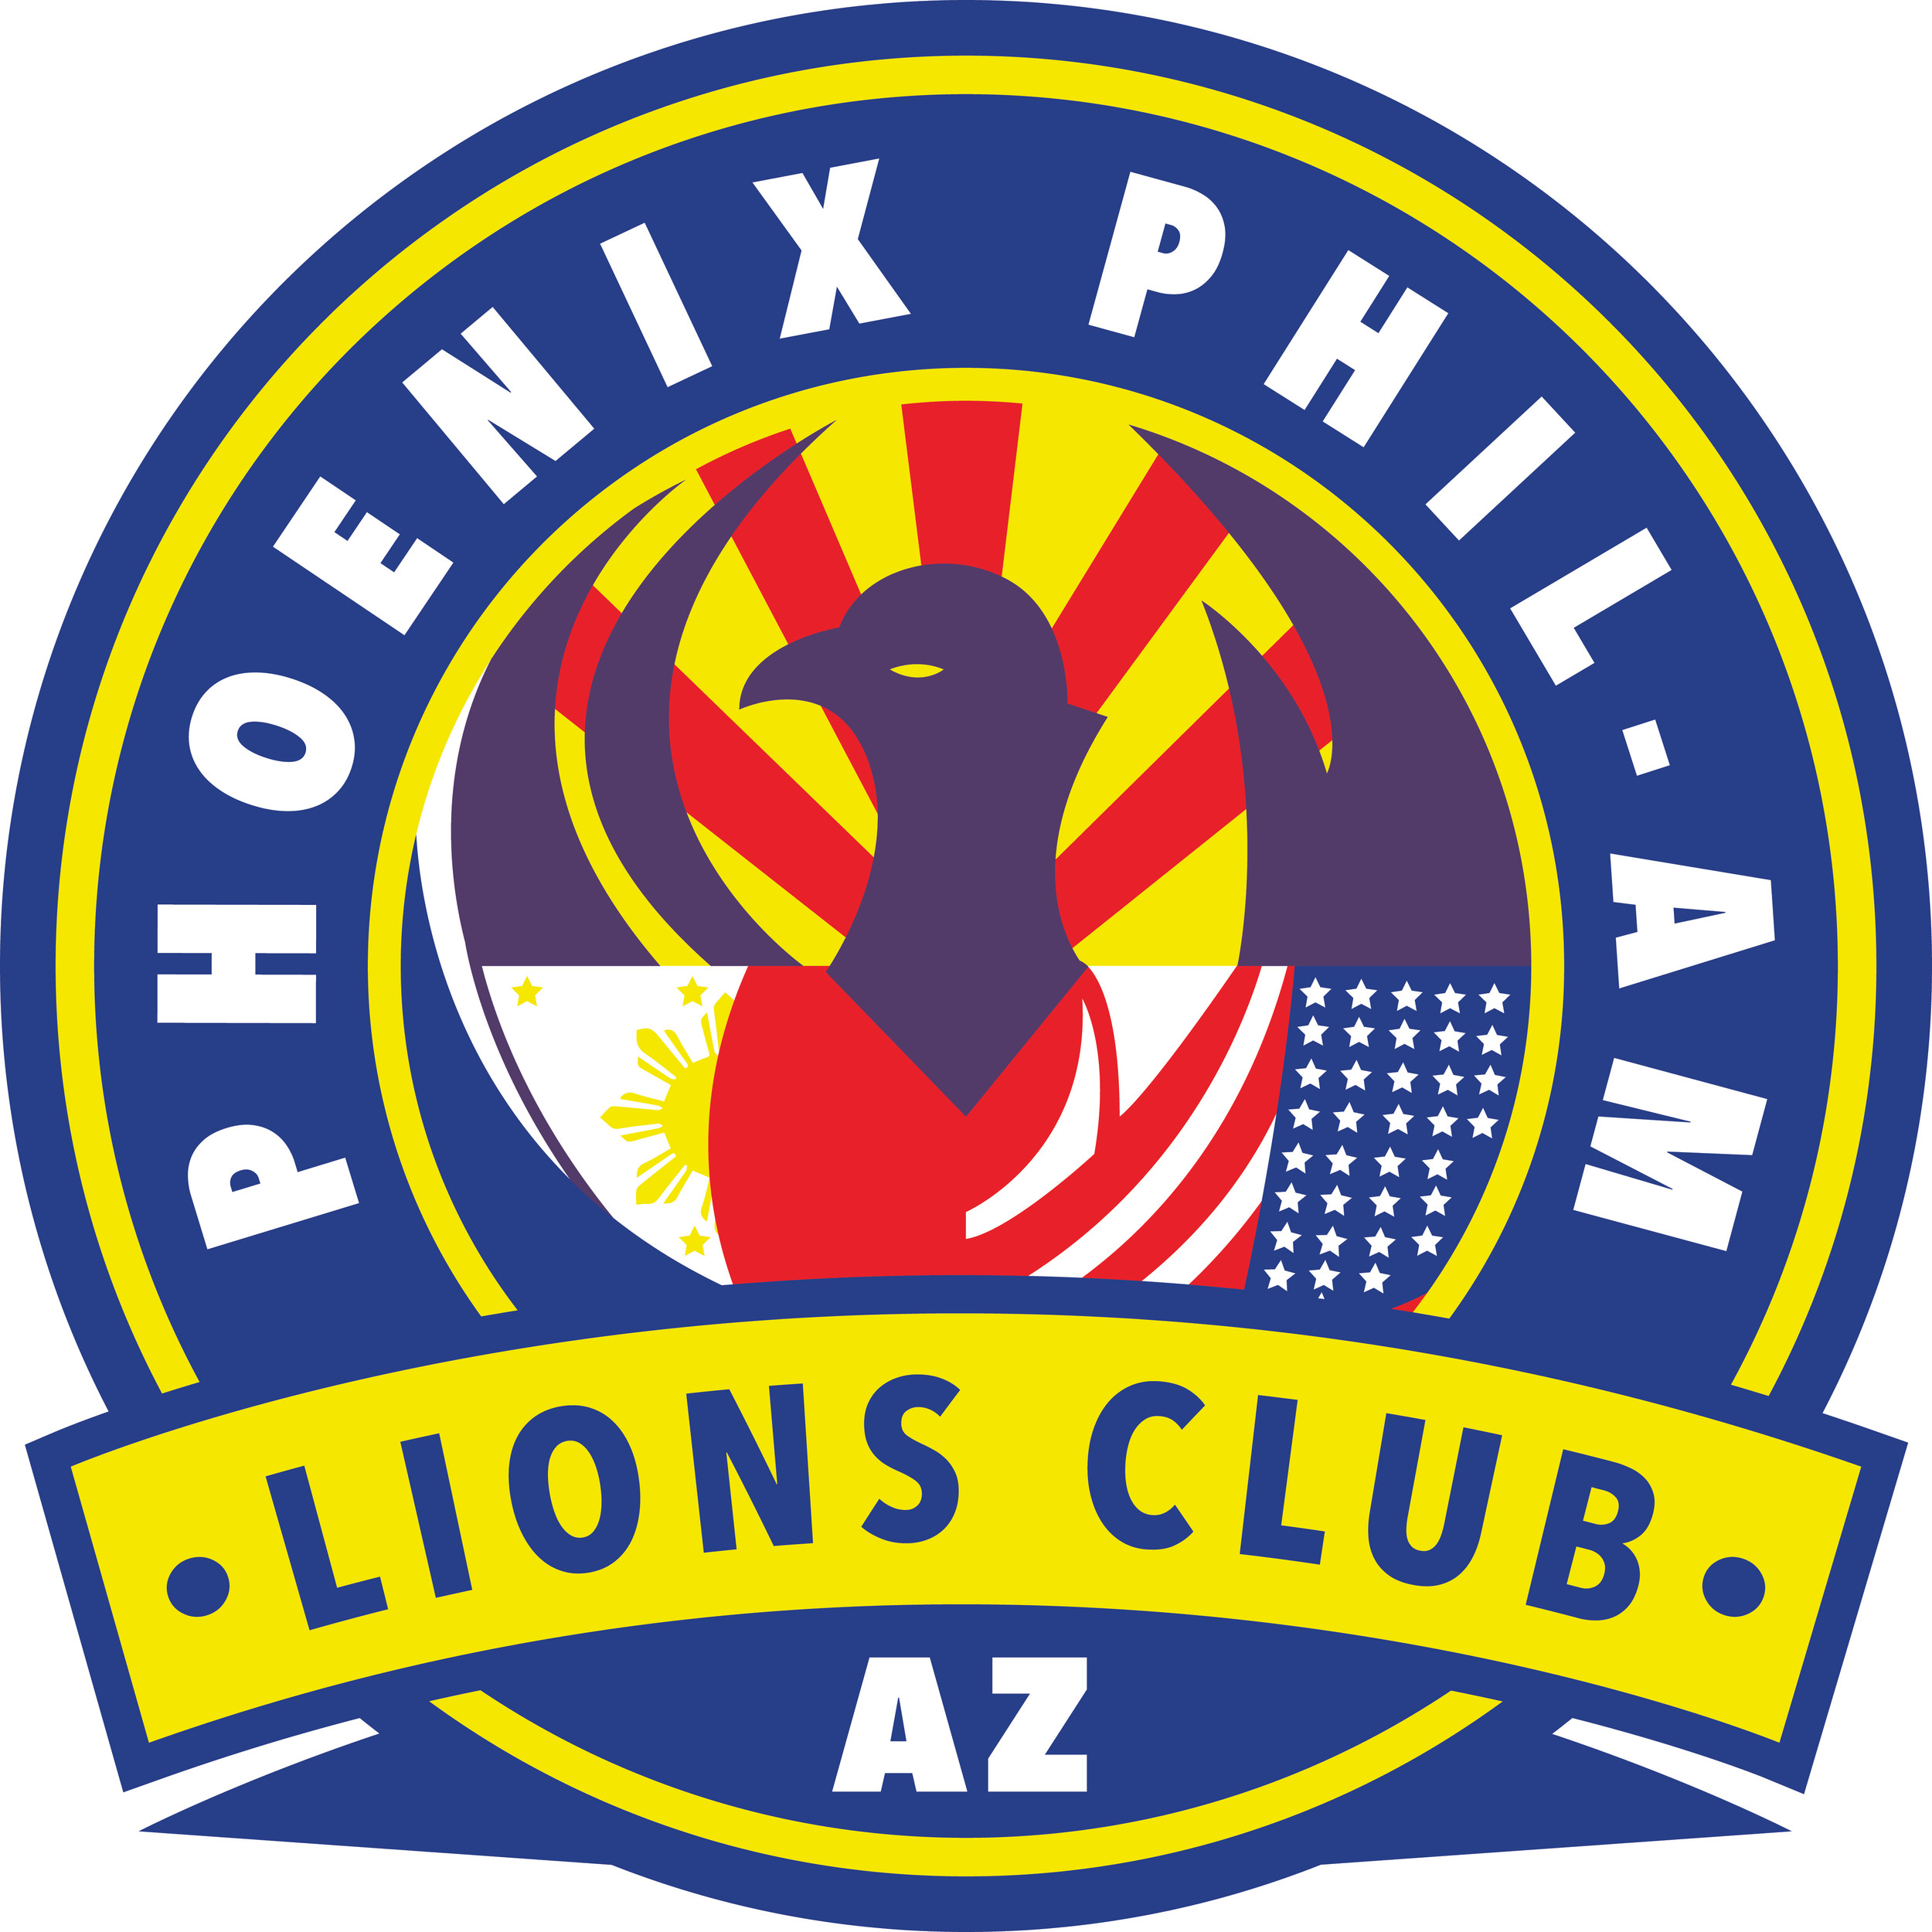 Filipino Charity Organizations in USA - Phoenix Philippine-American Lions Club